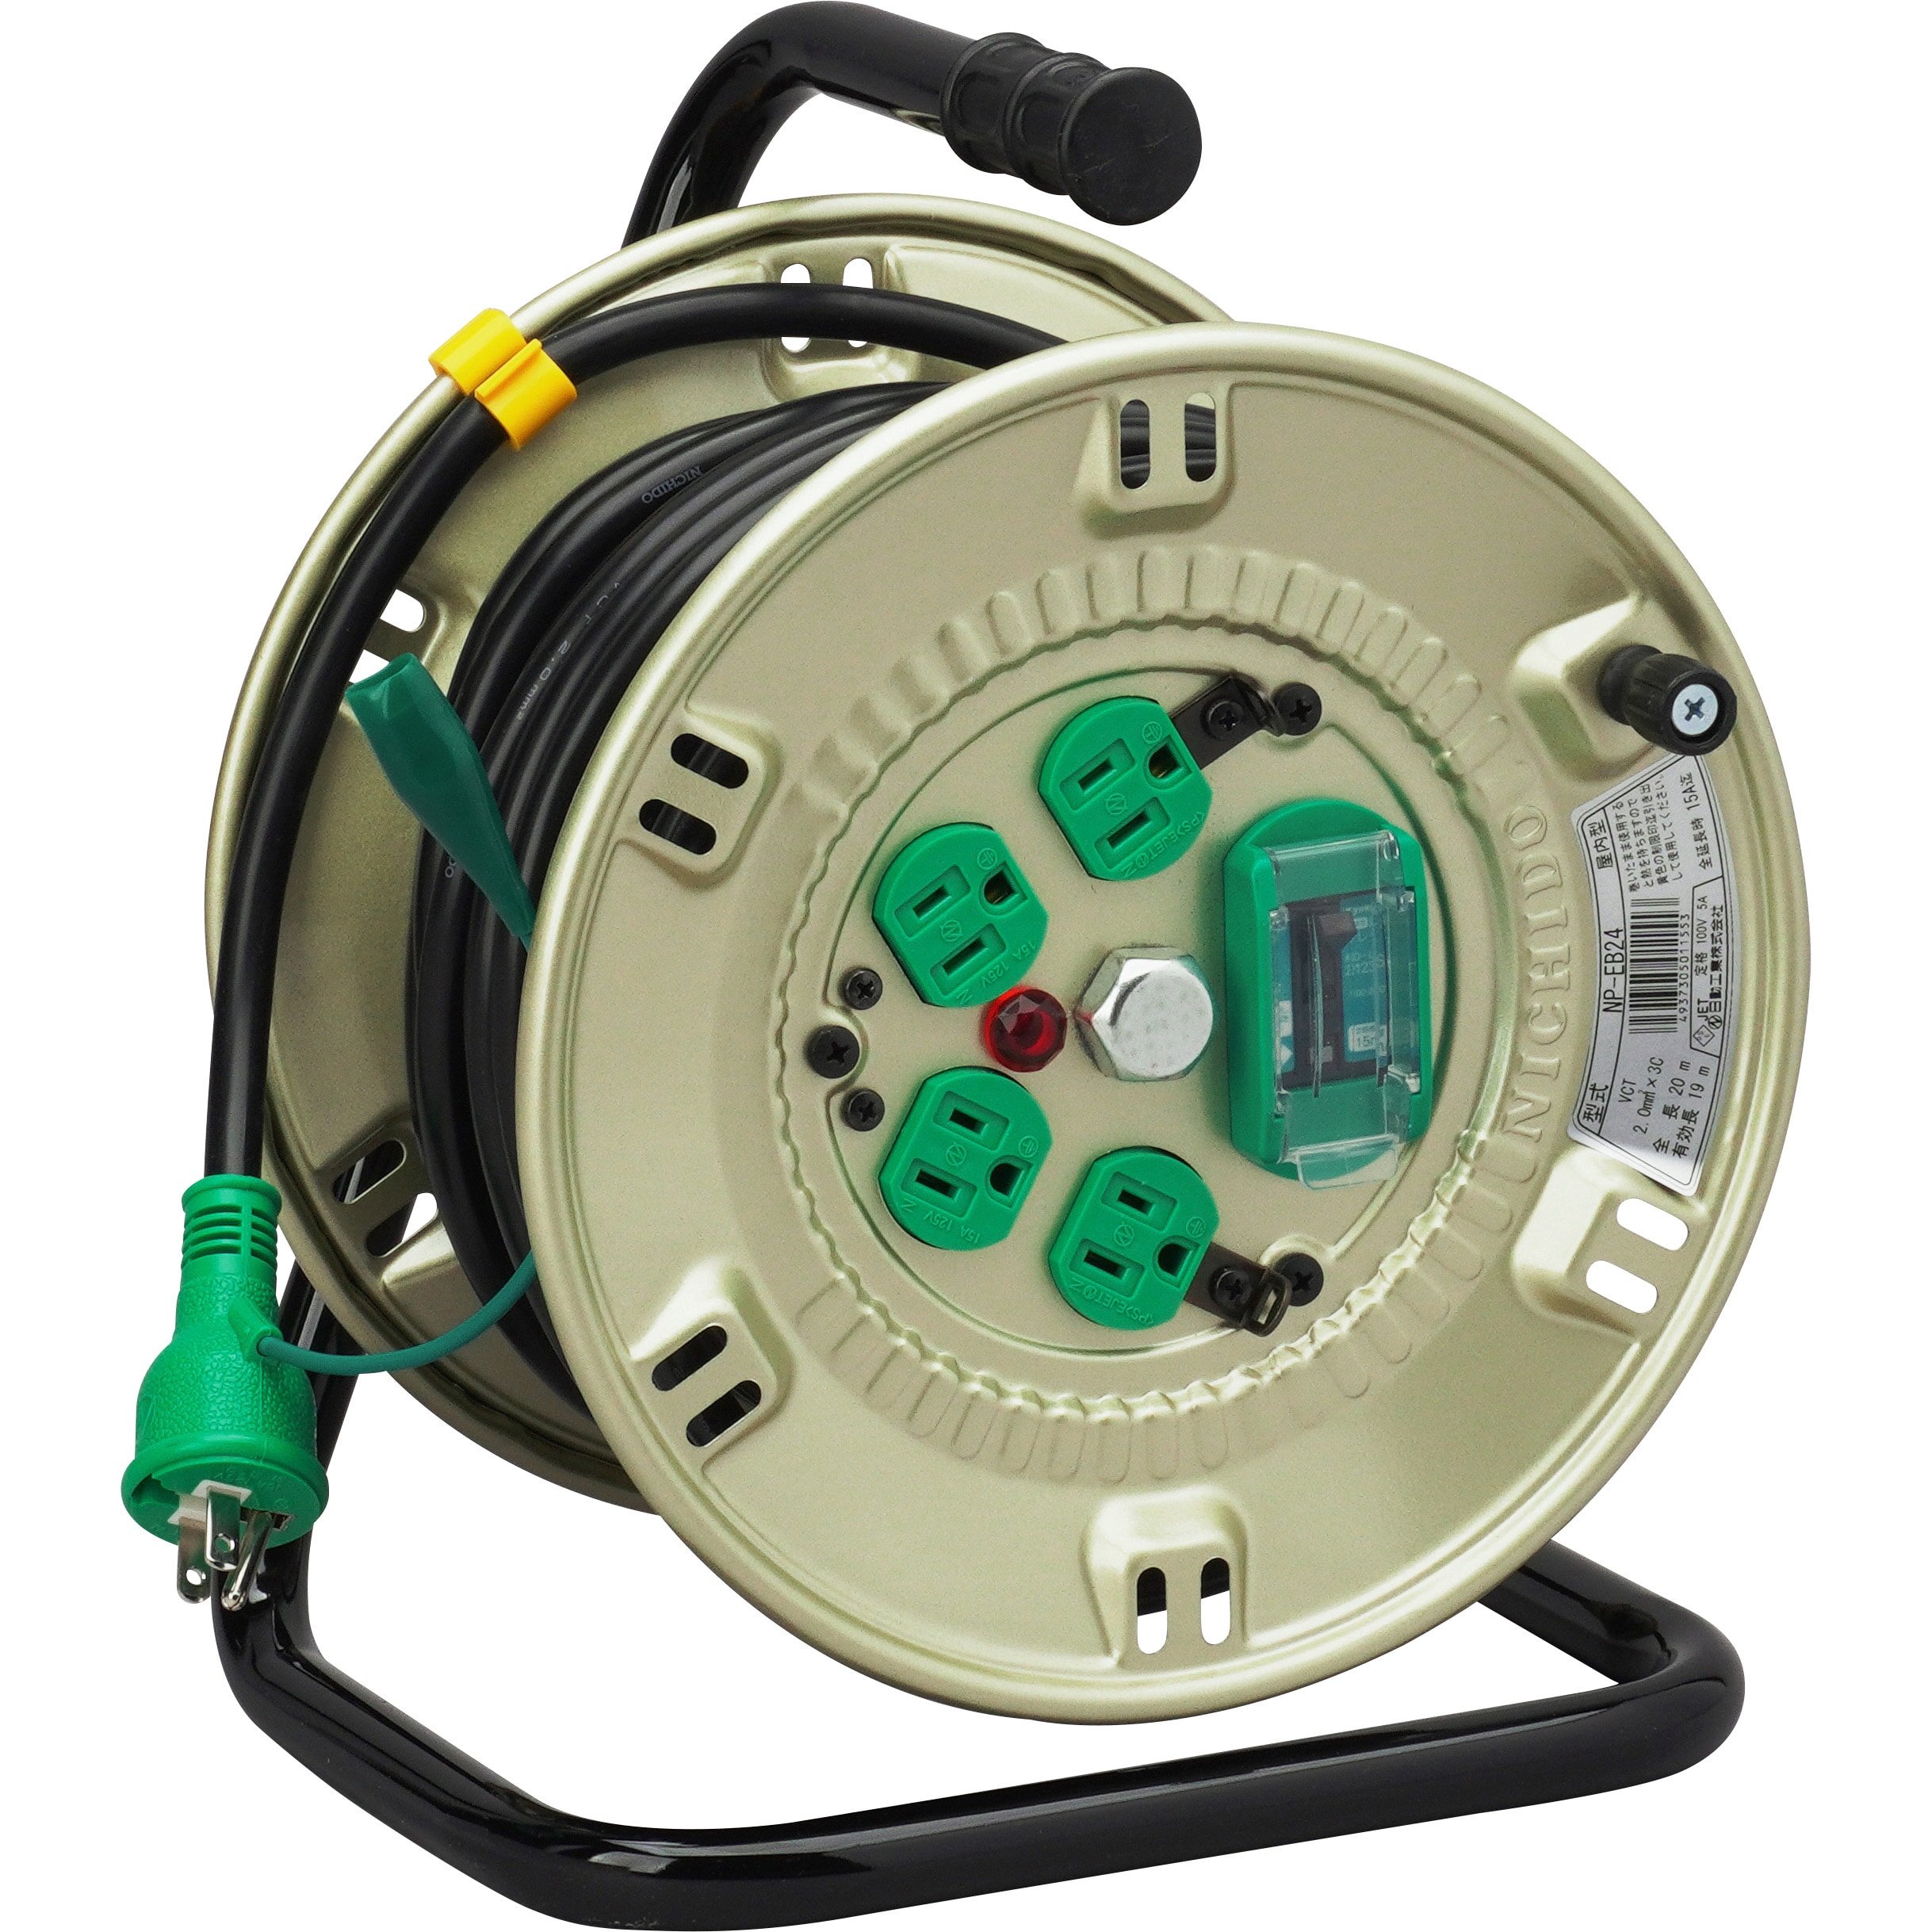 br> 日動 電工ドラム デジタルドラム 標準型 電圧電流メーター付 漏電